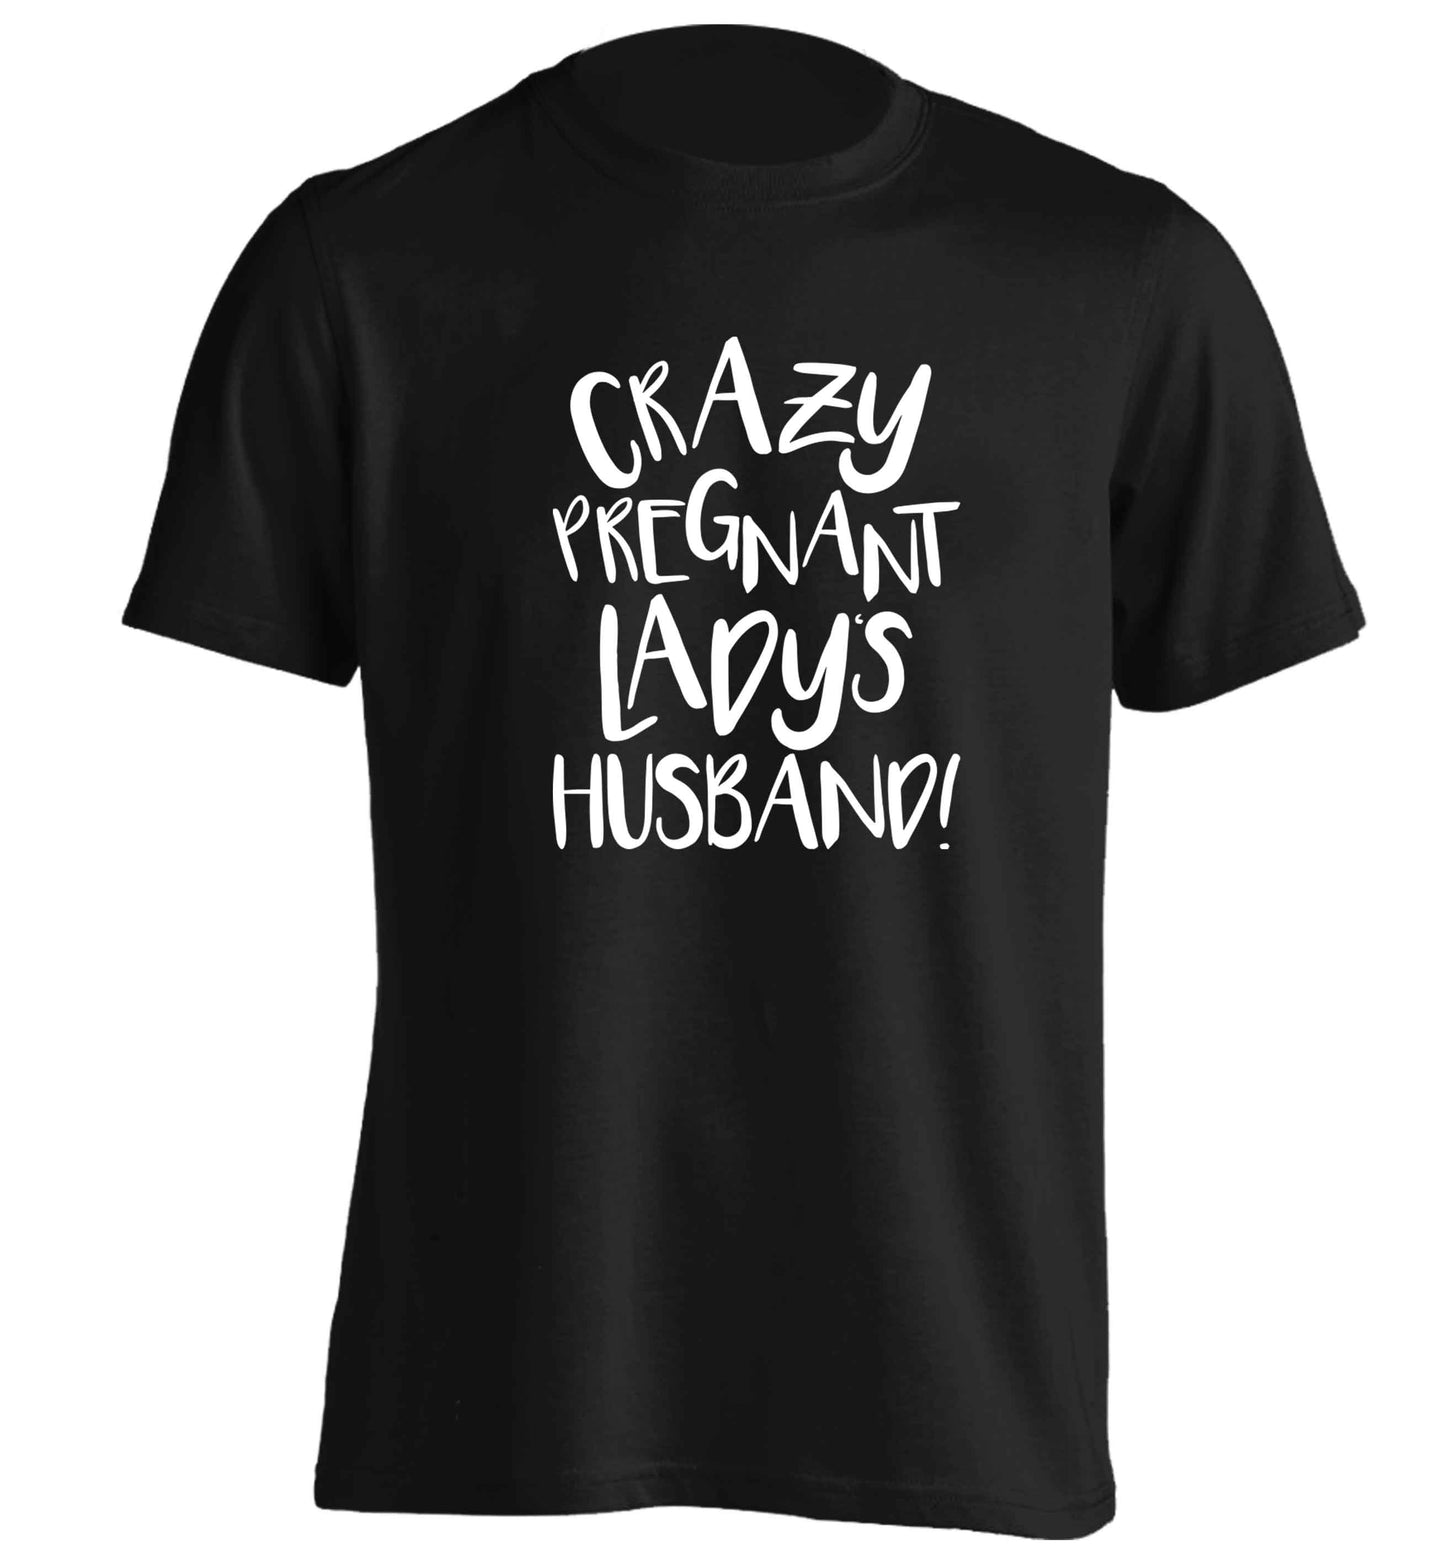 Crazy pregnant lady's husband adults unisex black Tshirt 2XL